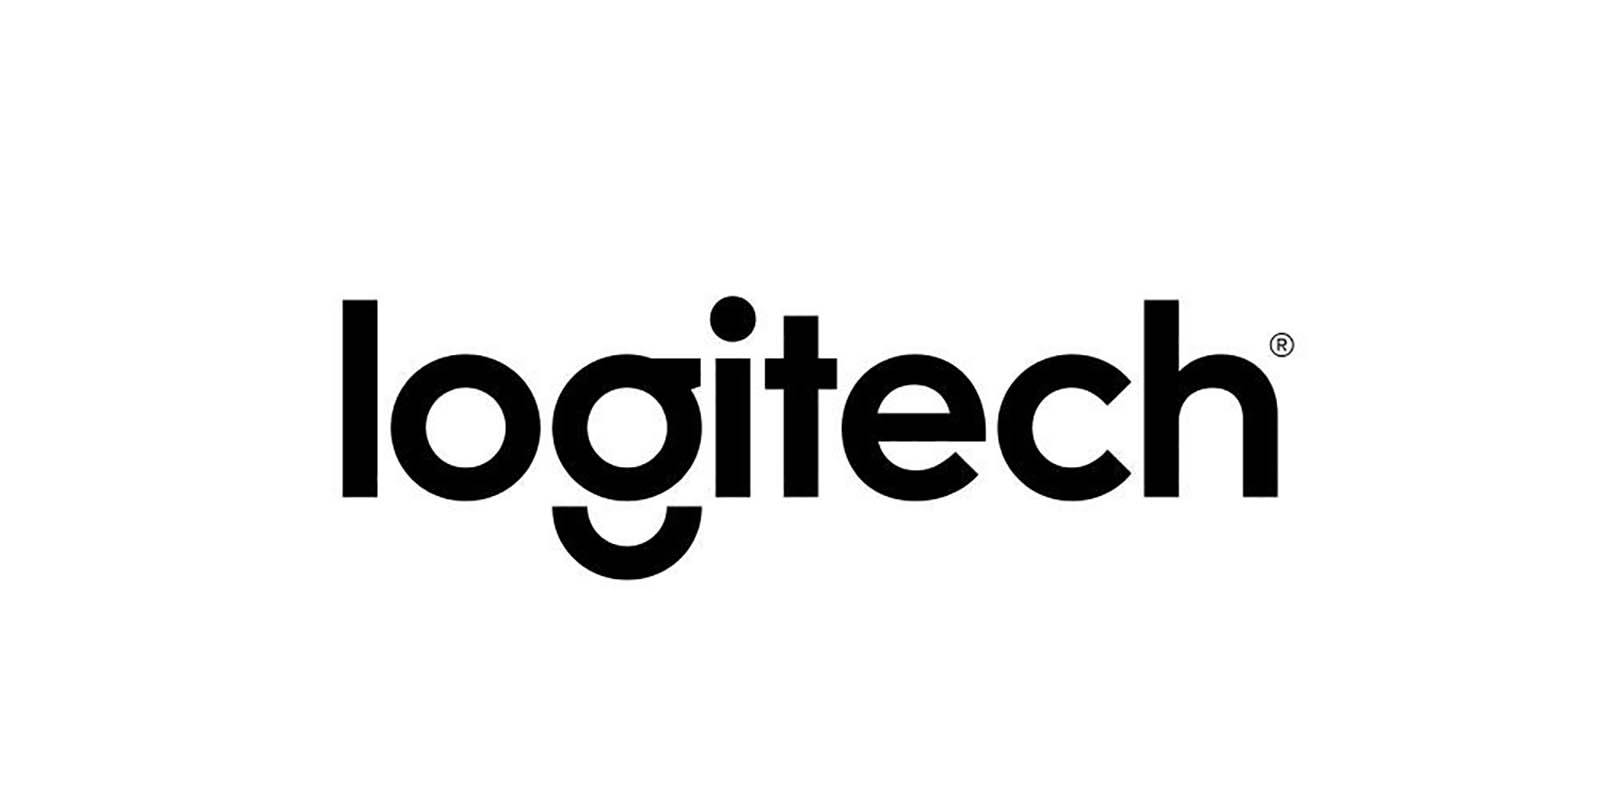 Logitech's logo